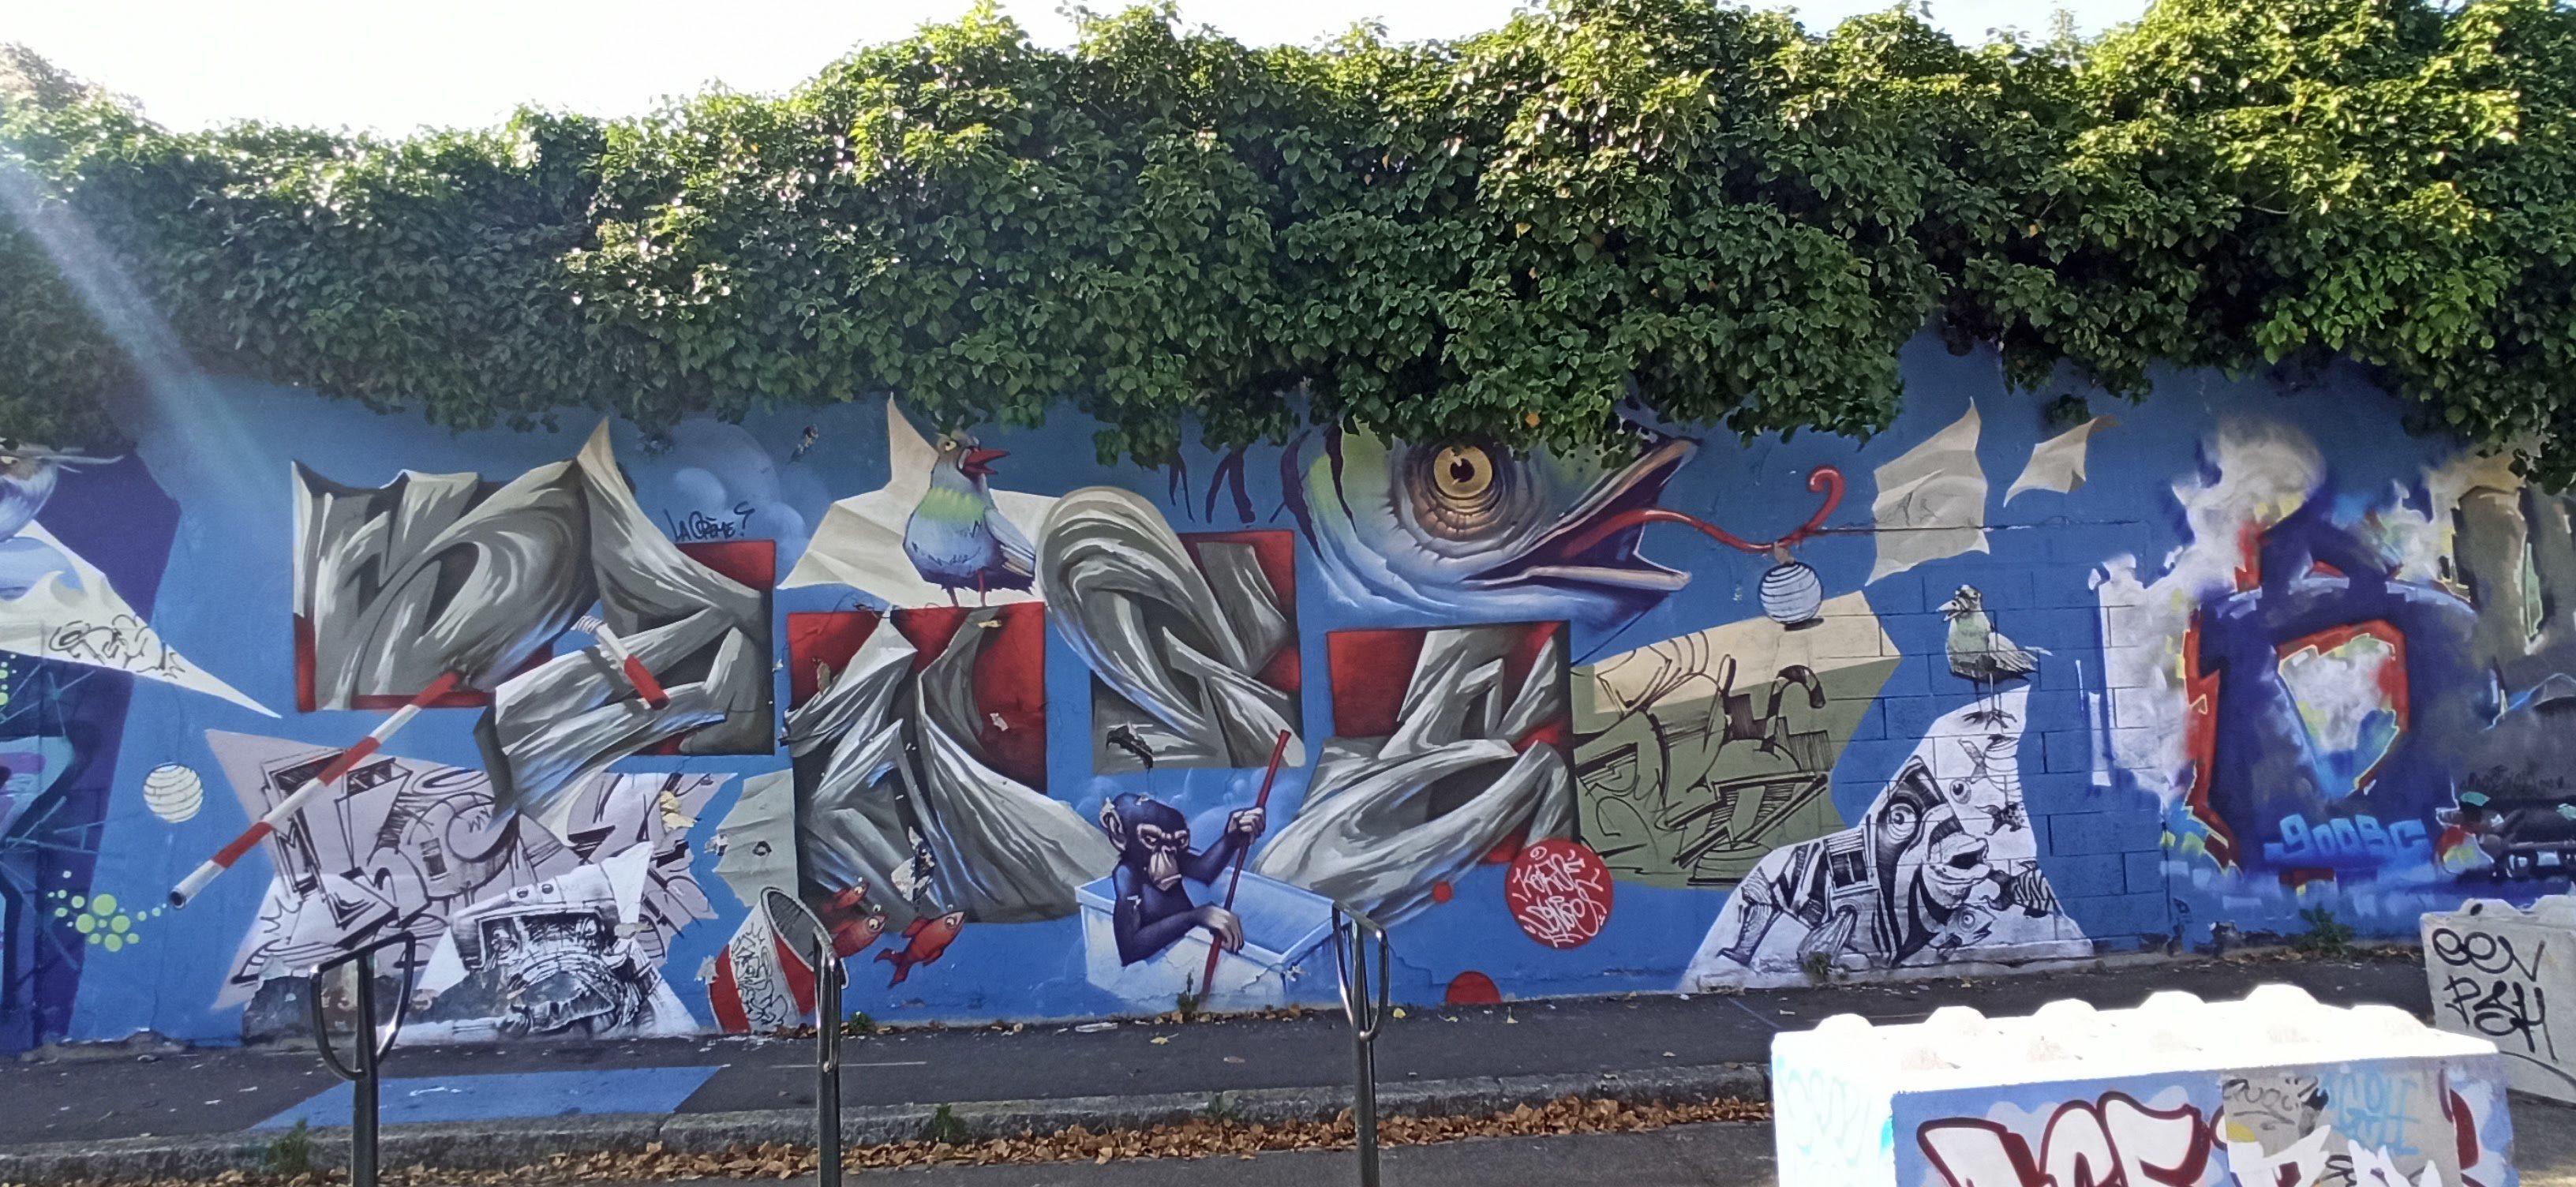 Graffiti 5118  by the artist Kafé Korsé captured by Rabot in Nantes France